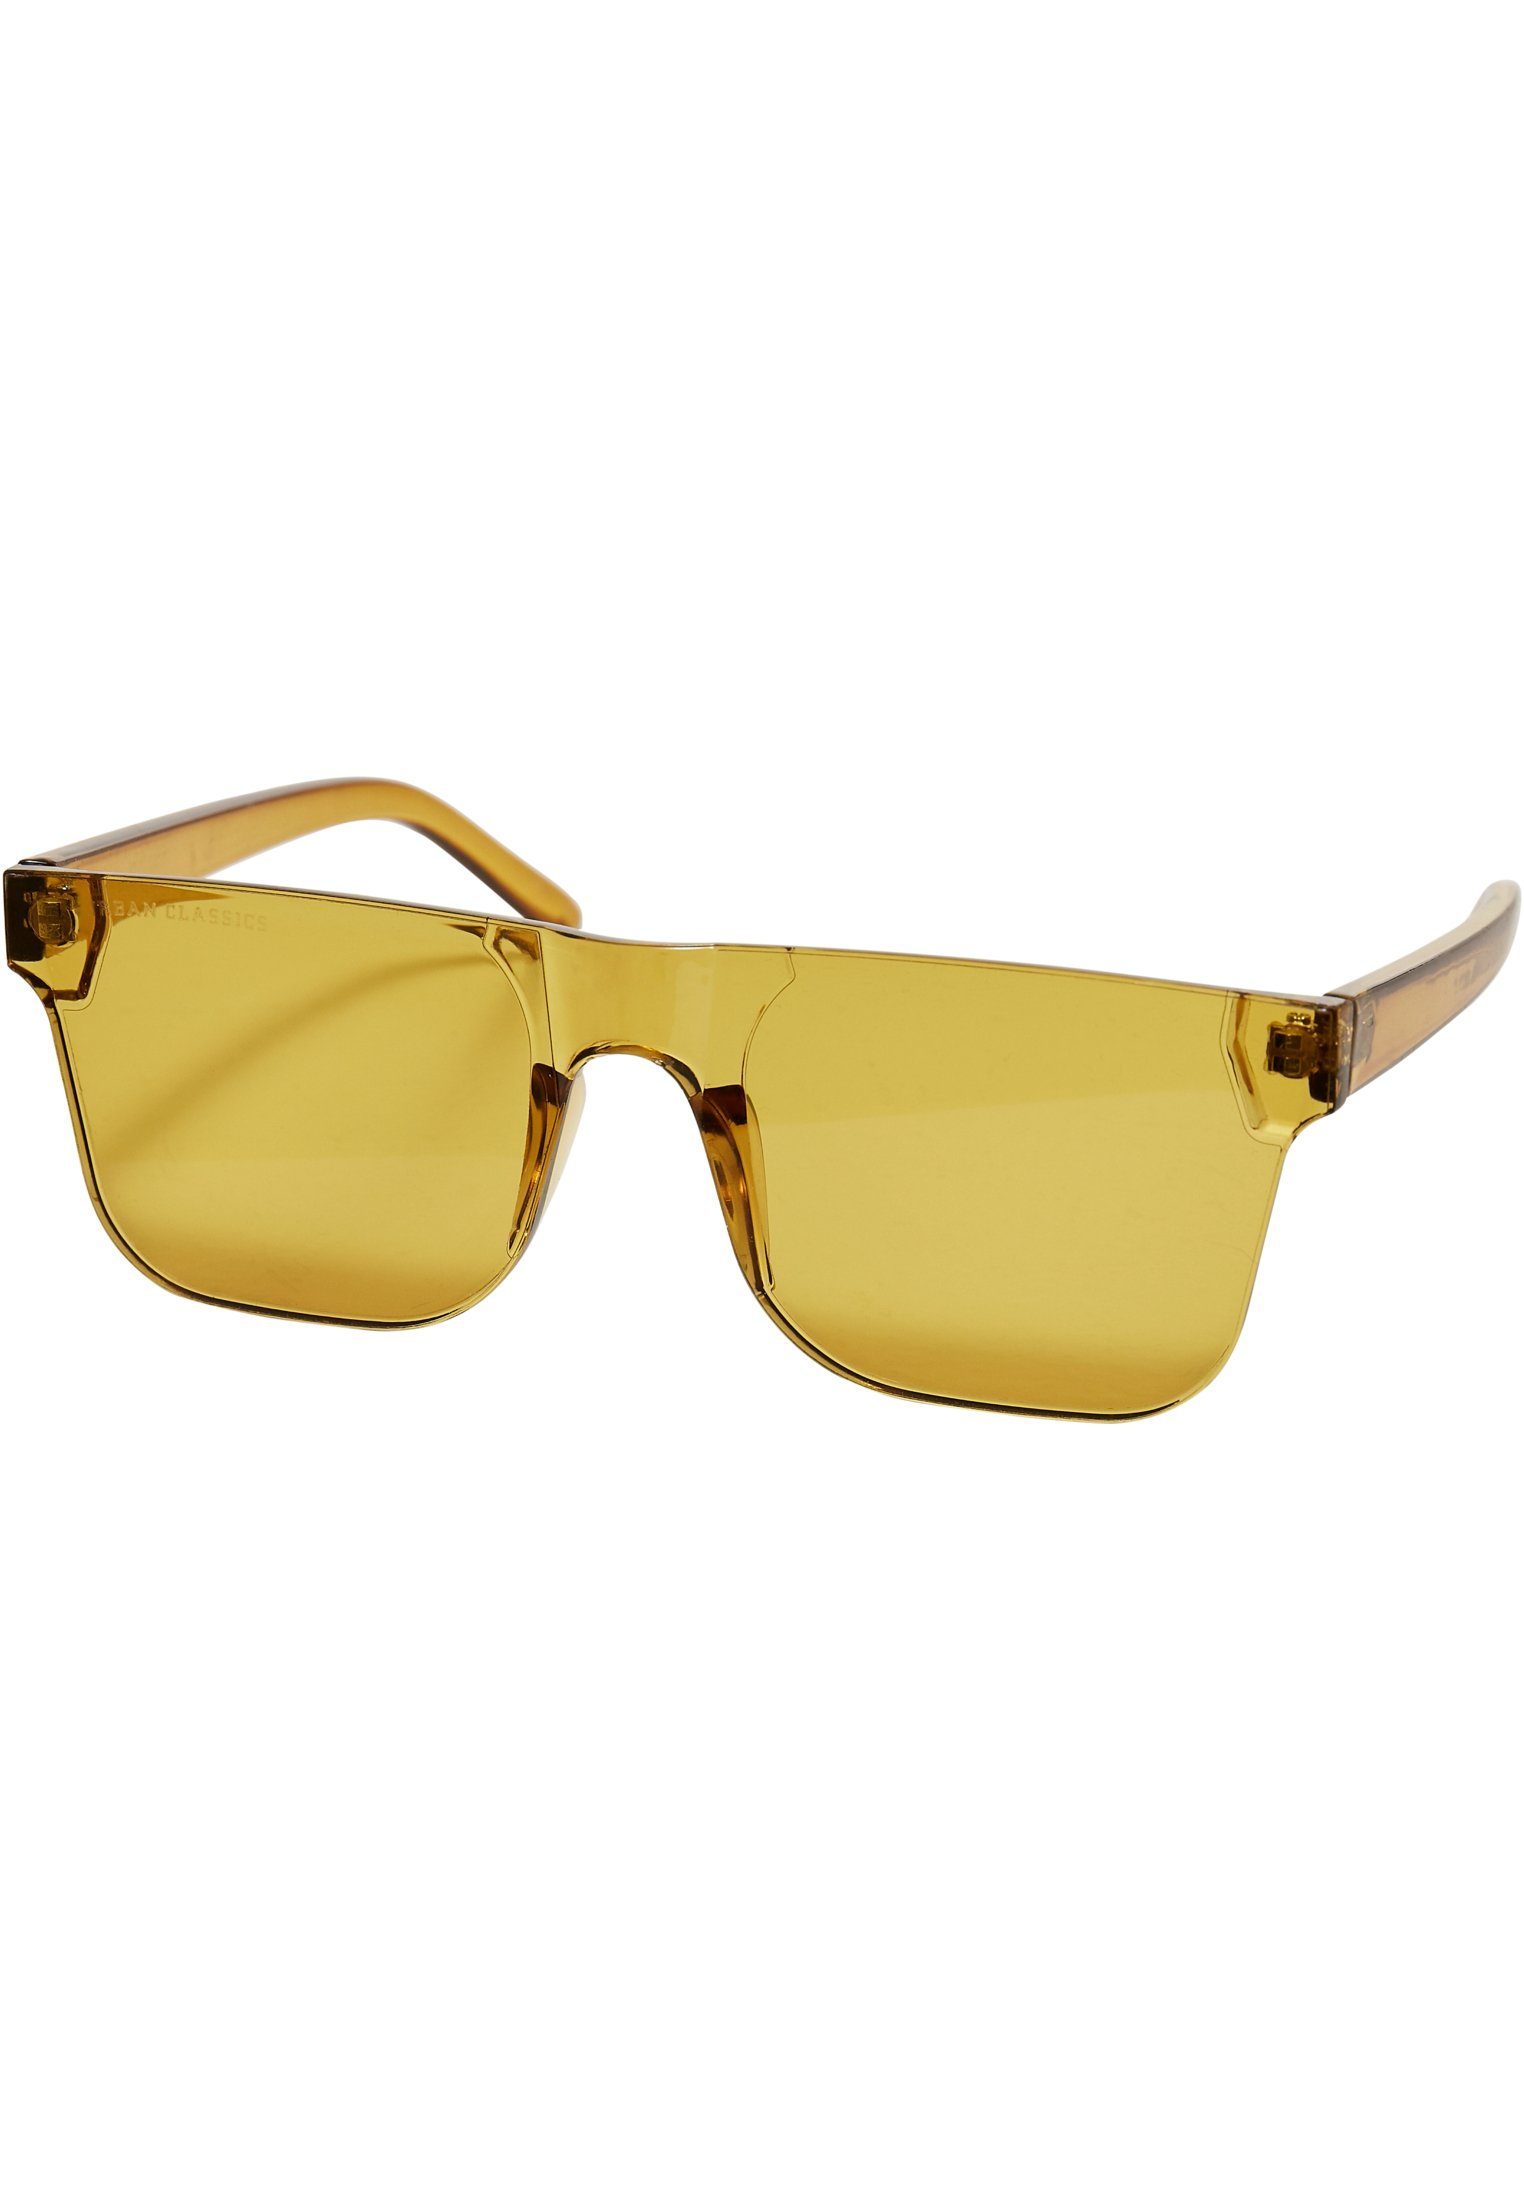 Sonnenbrille mustard With CLASSICS Case URBAN Sunglasses Honolulu Unisex